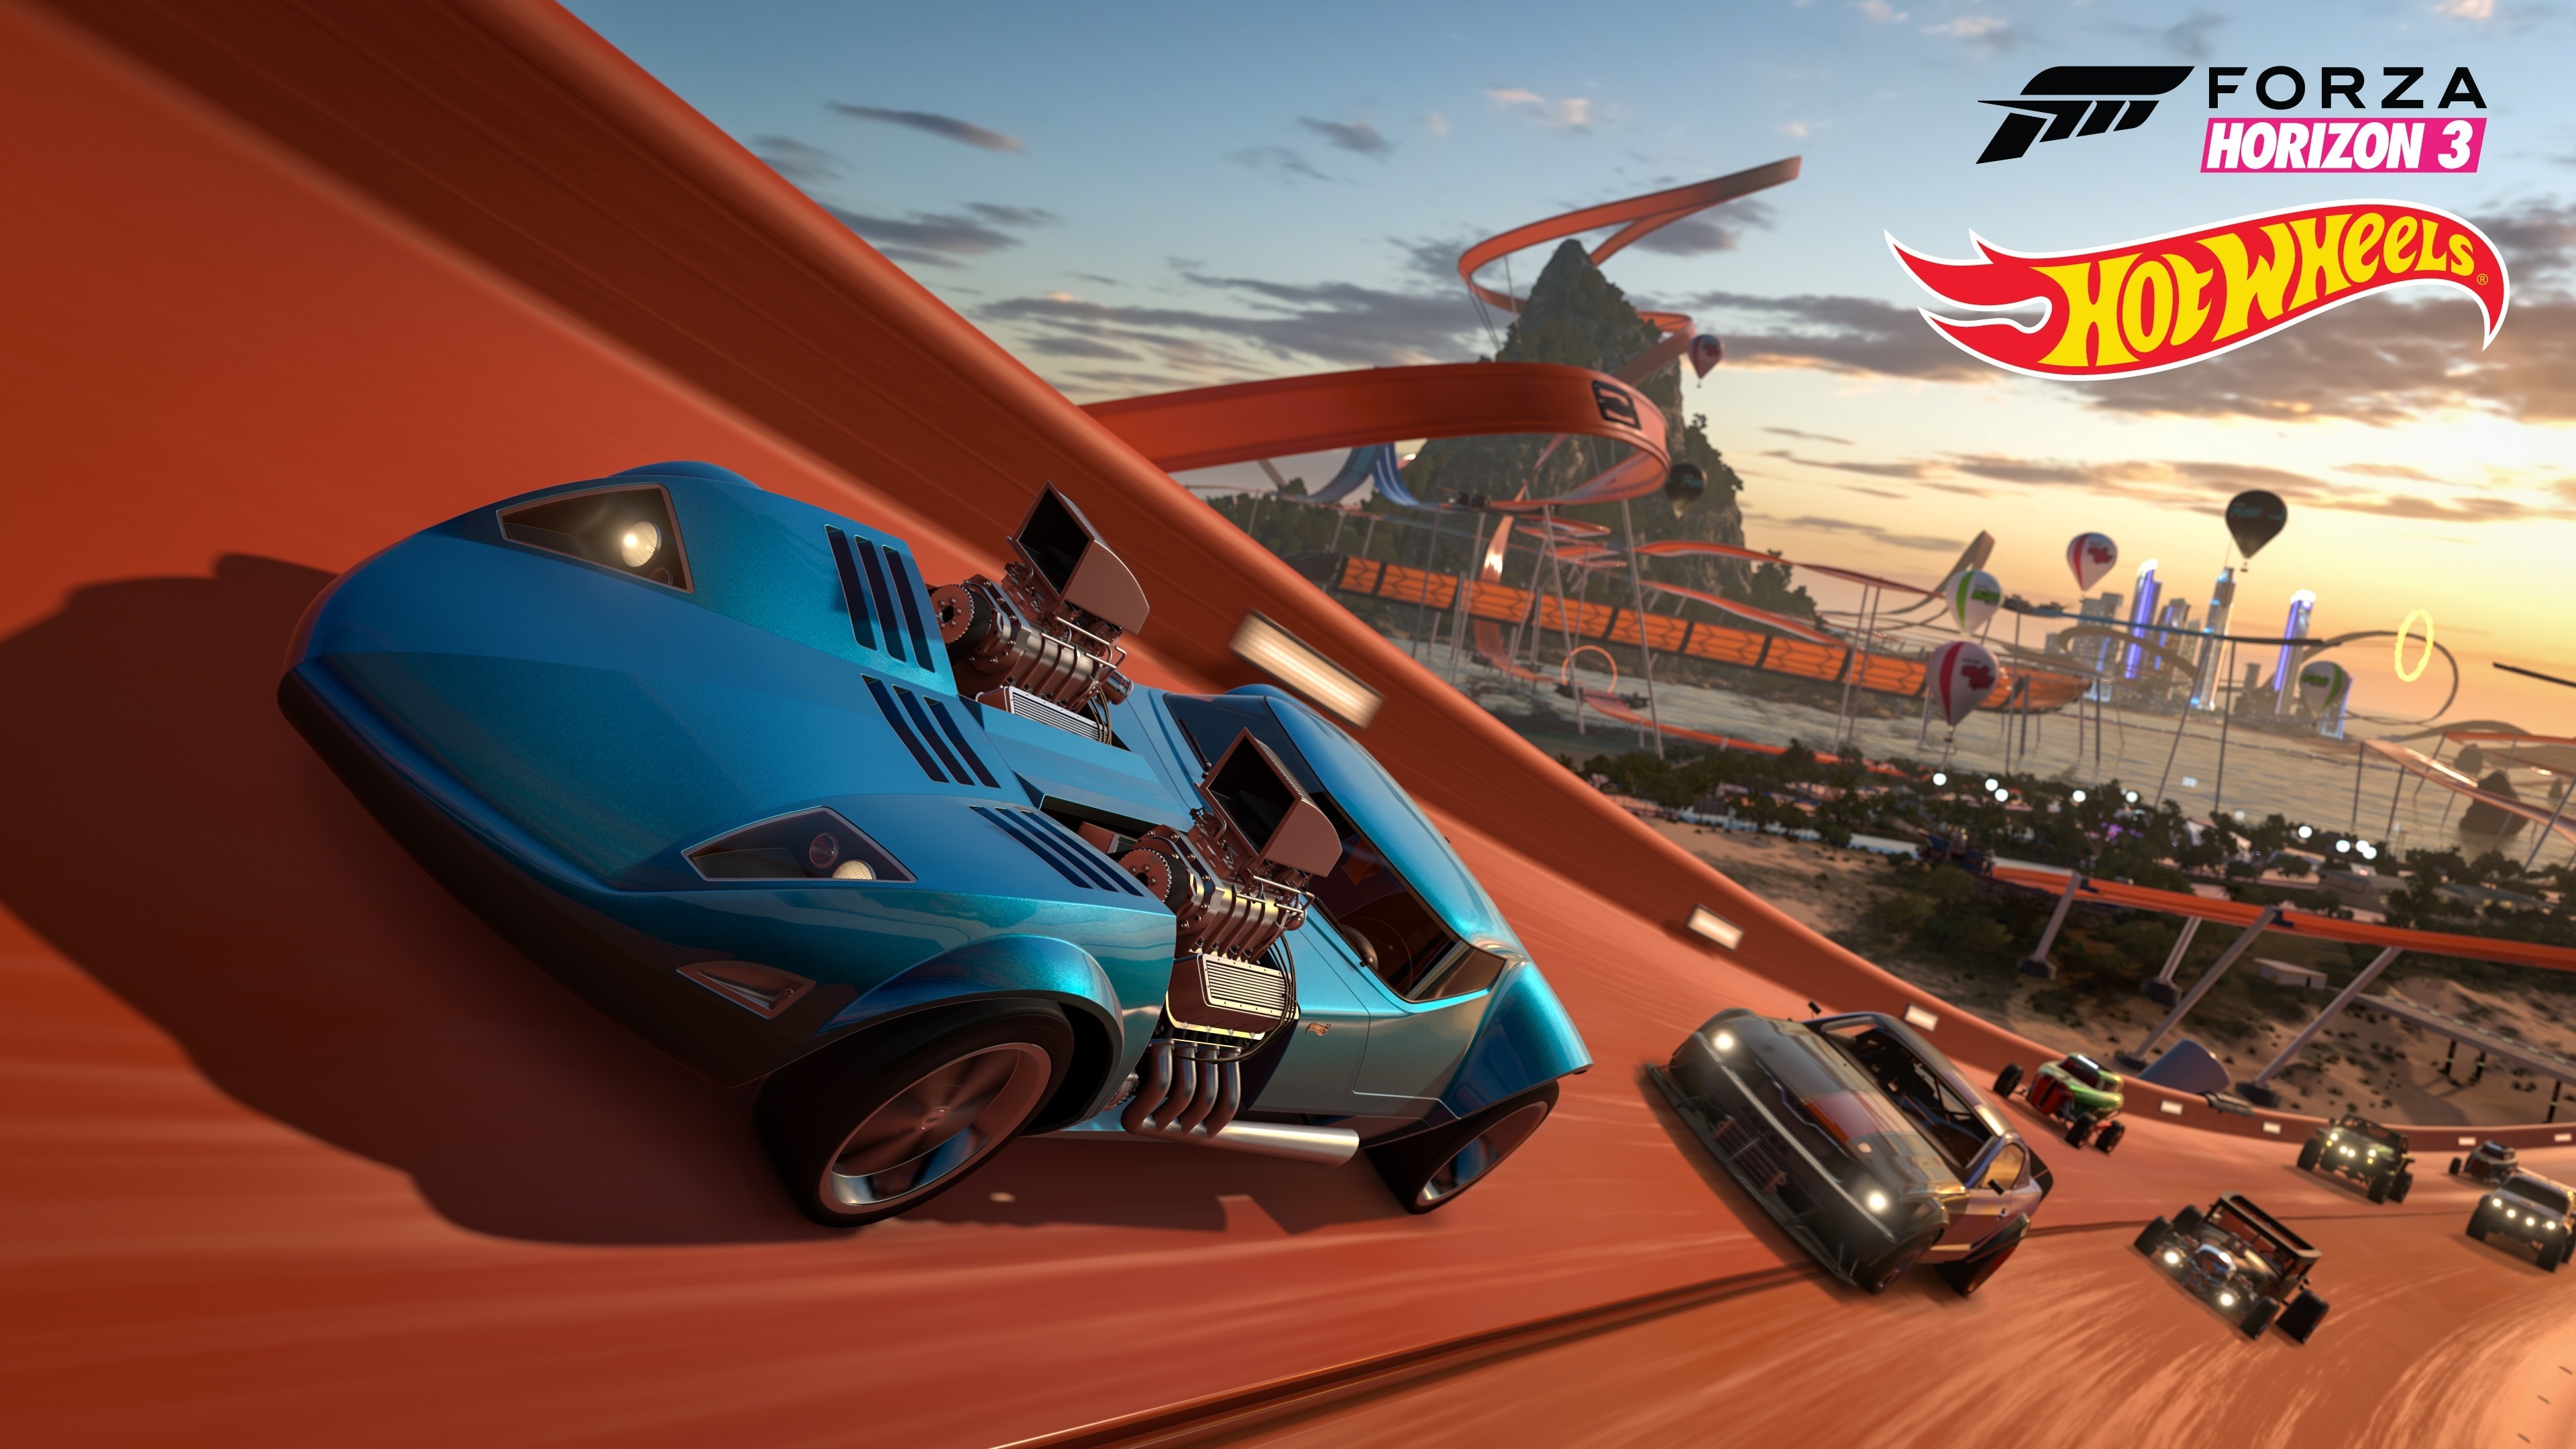 Forza Horizon 3, Hot Wheels Wallpaper, 3840x2160 4K Desktop